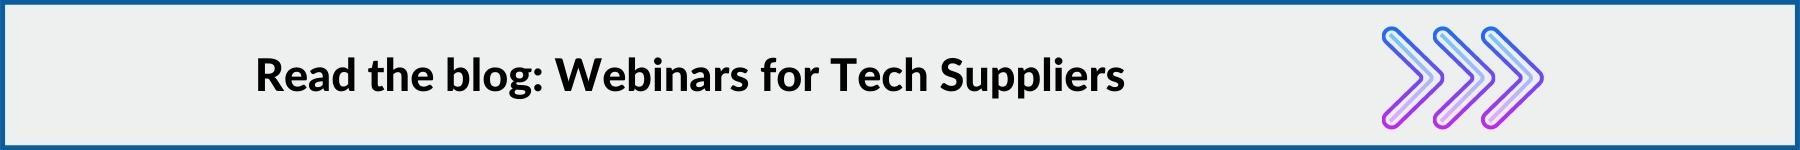 Read the blog: Webinars for Tech Suppliers